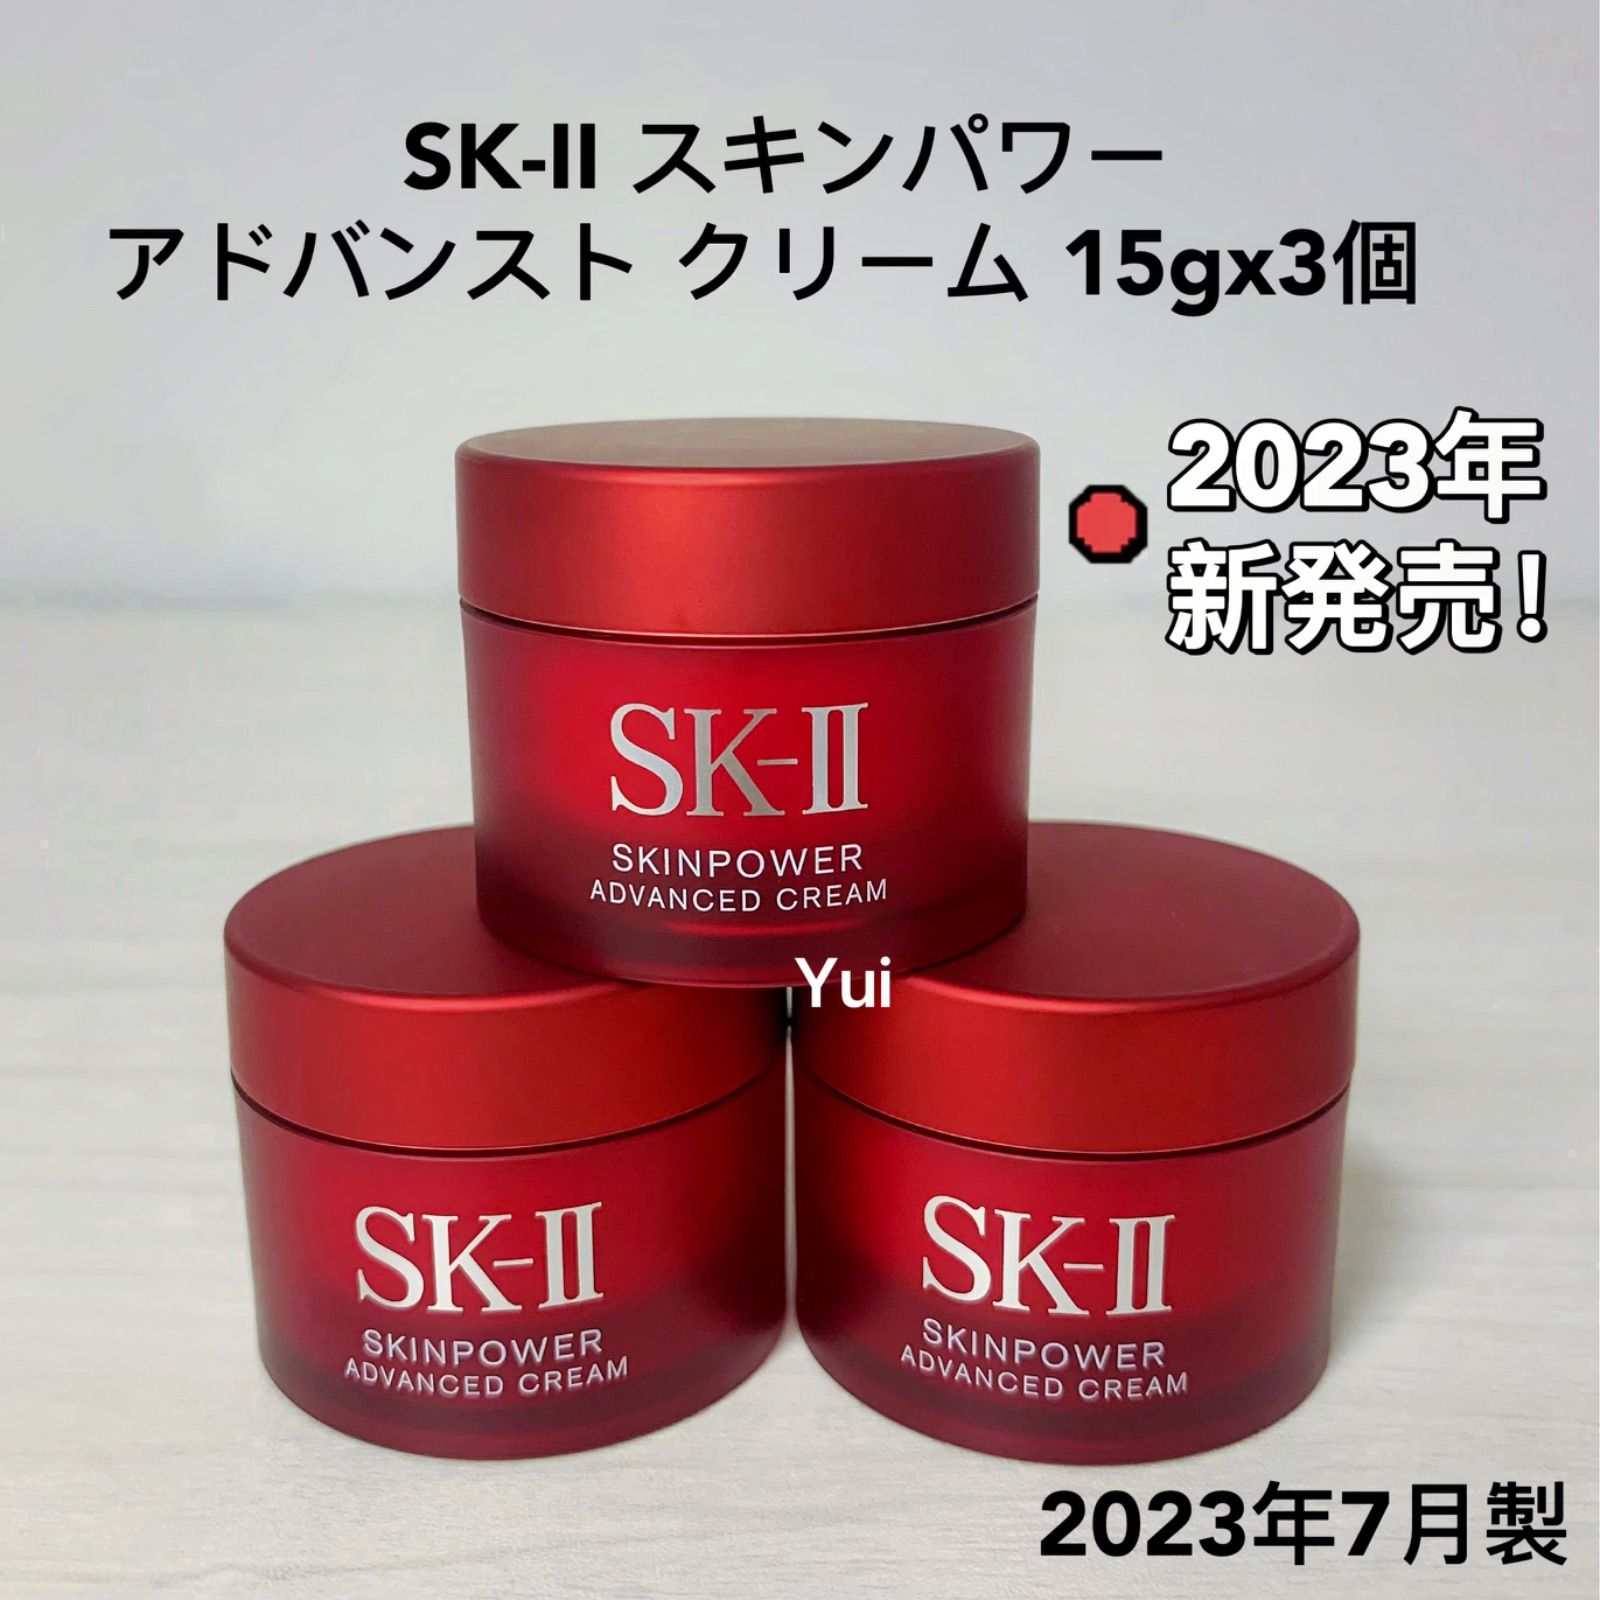 SK-Ⅱ スキンパワーアドバンストクリーム - 4